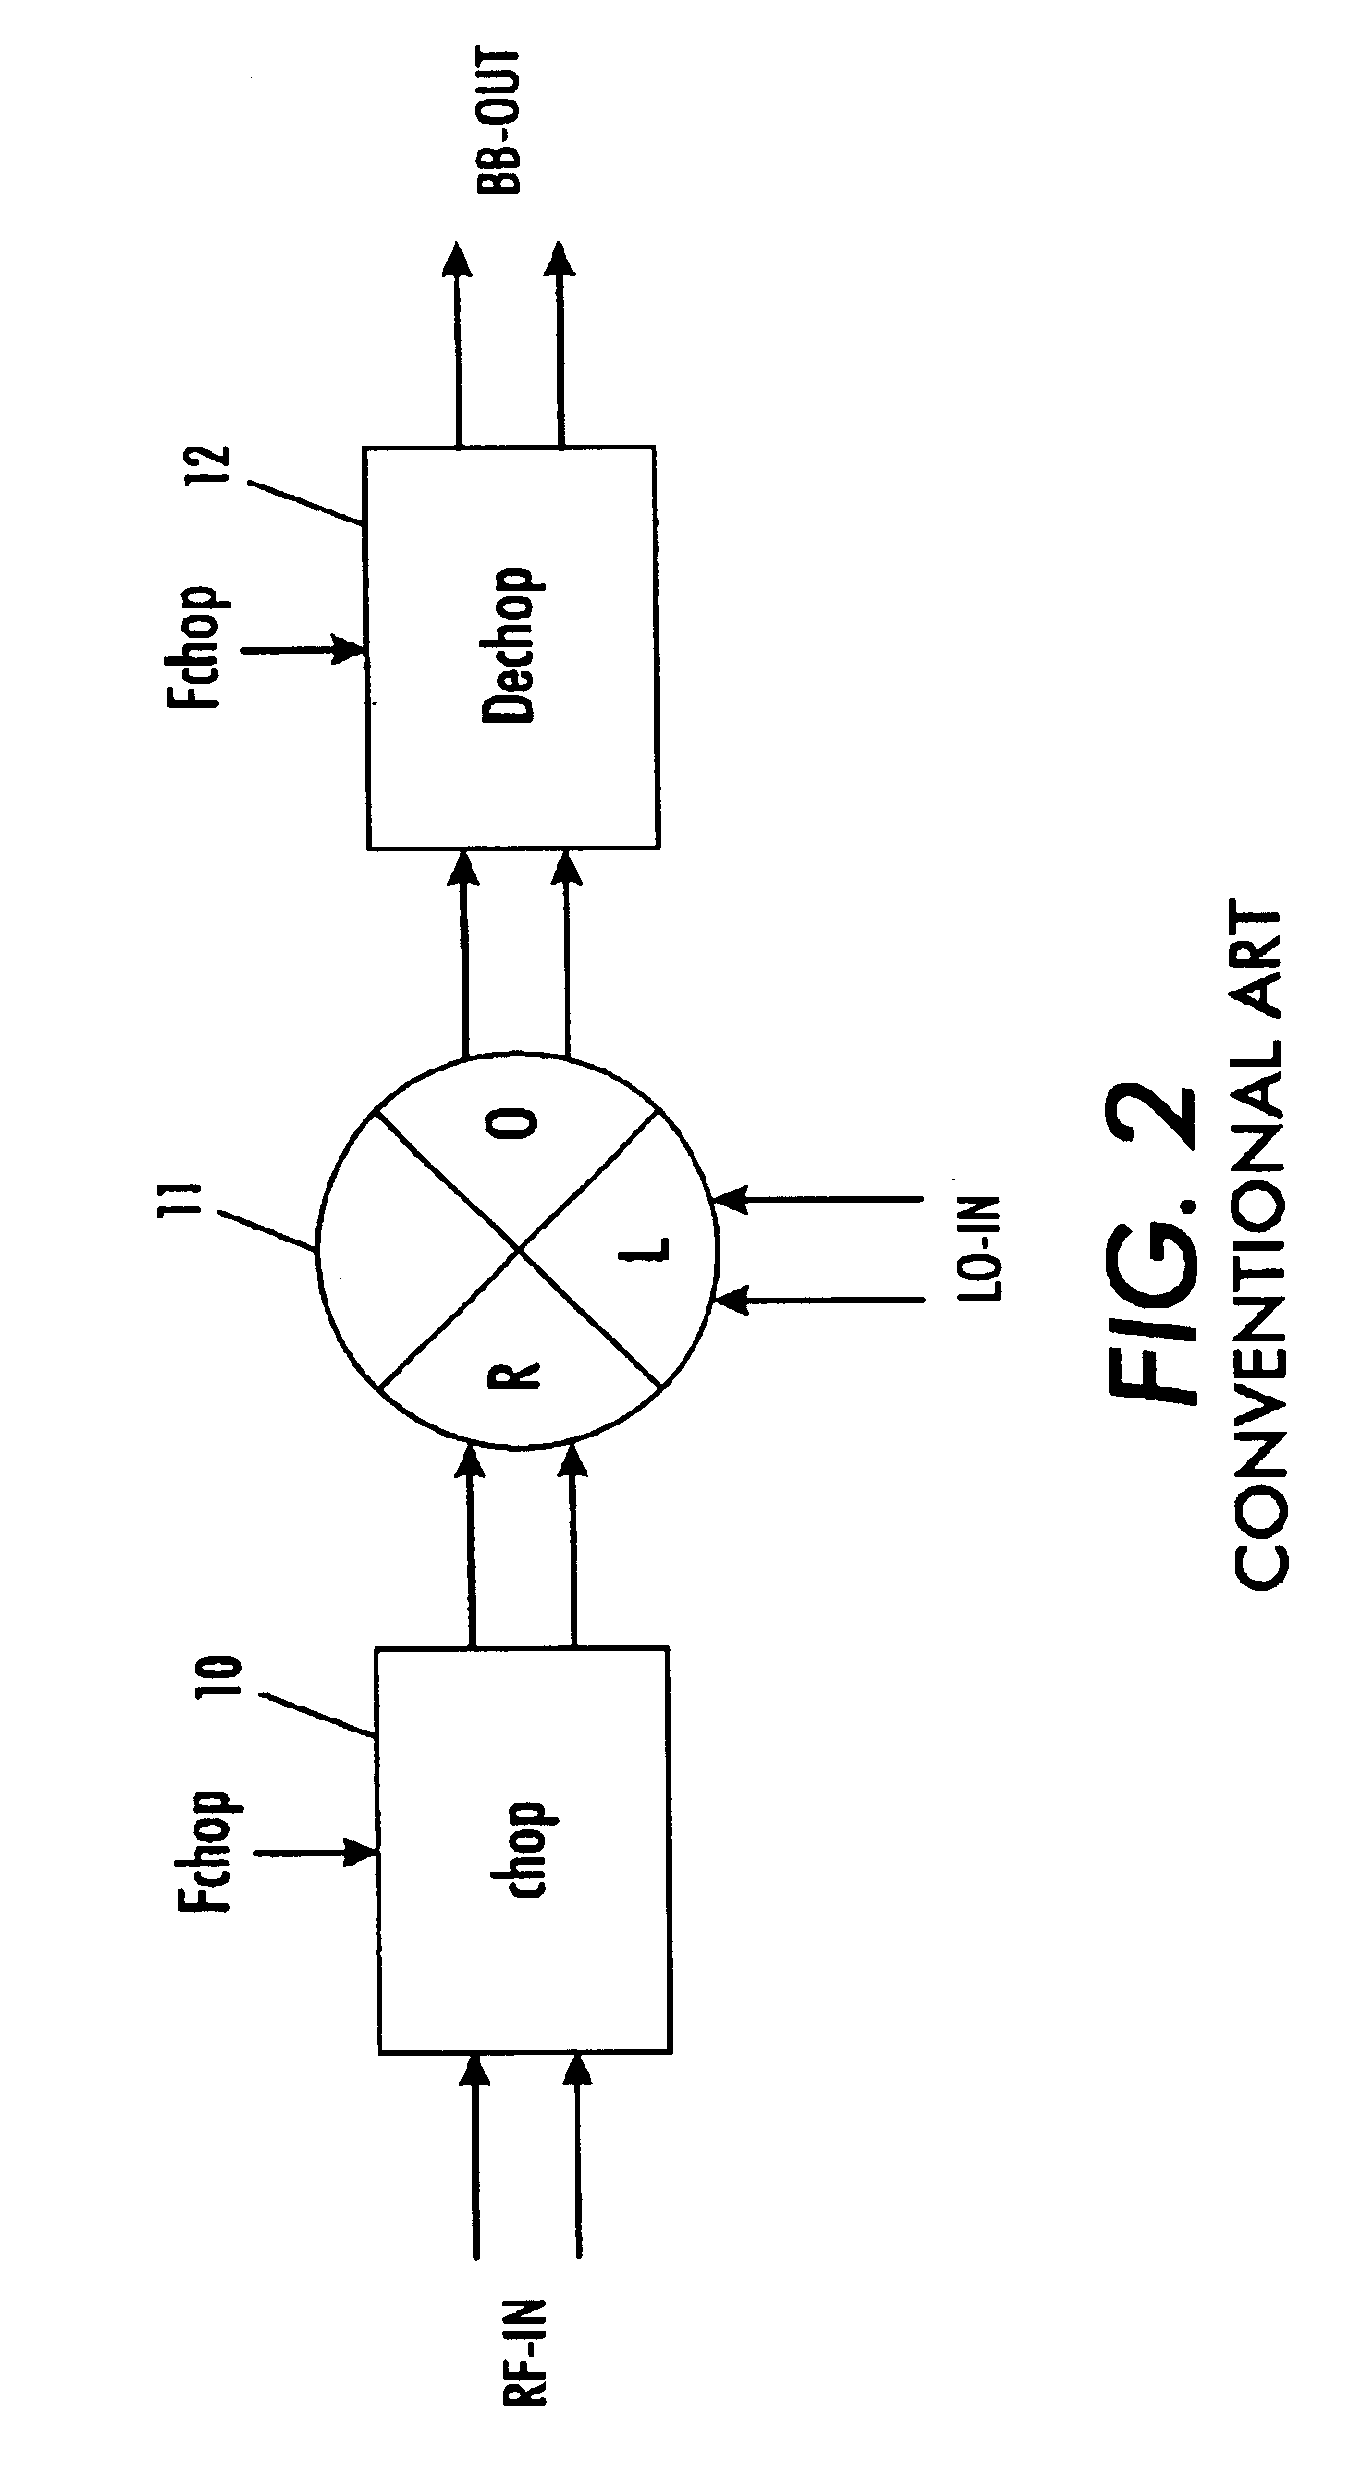 Direct conversion receiver apparatus